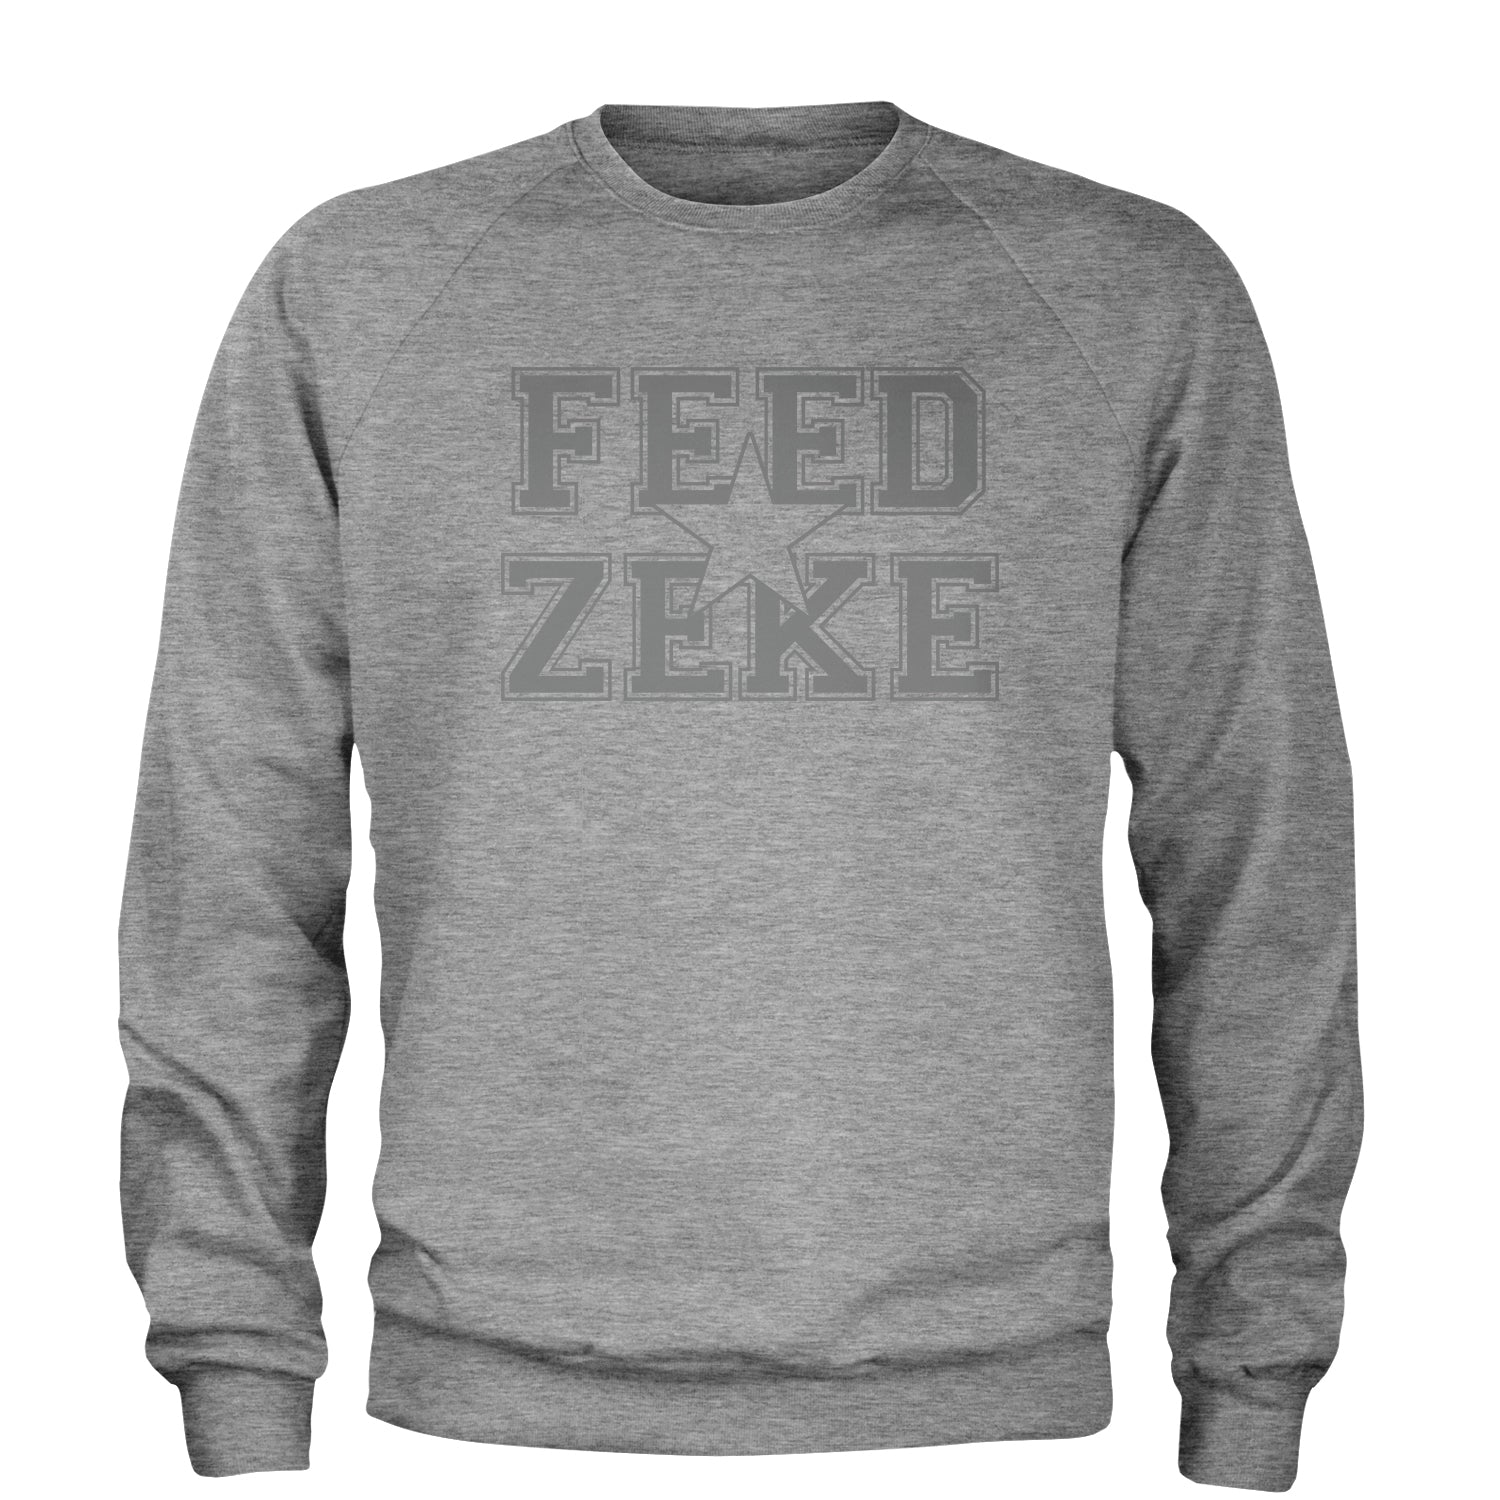 Feed Zeke Adult Crewneck Sweatshirt #expressiontees by Expression Tees